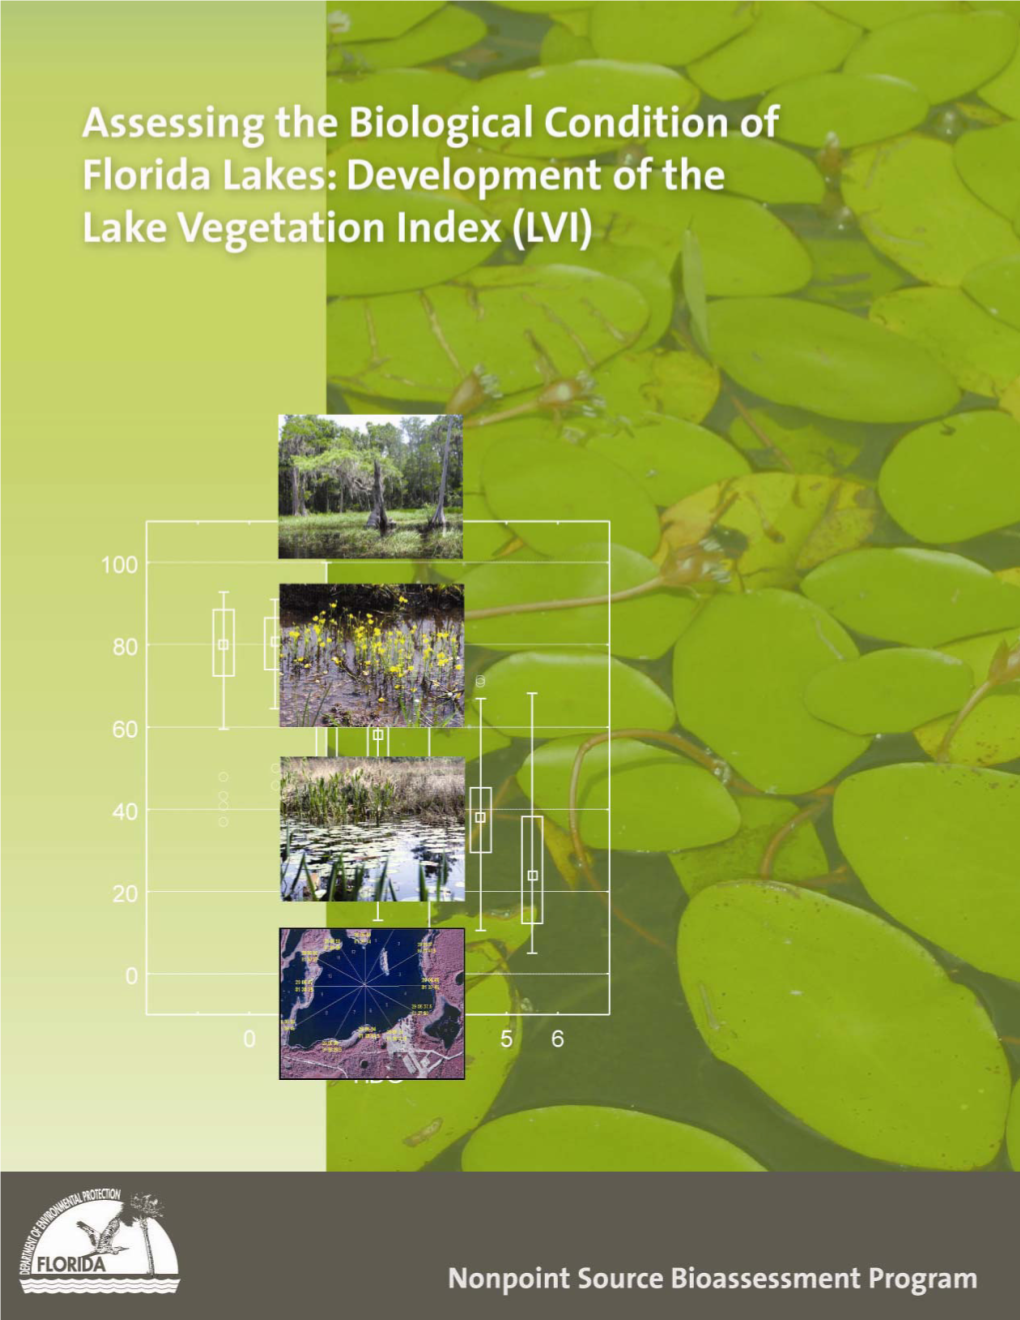 Development of the Lake Vegetation Index (LVI)